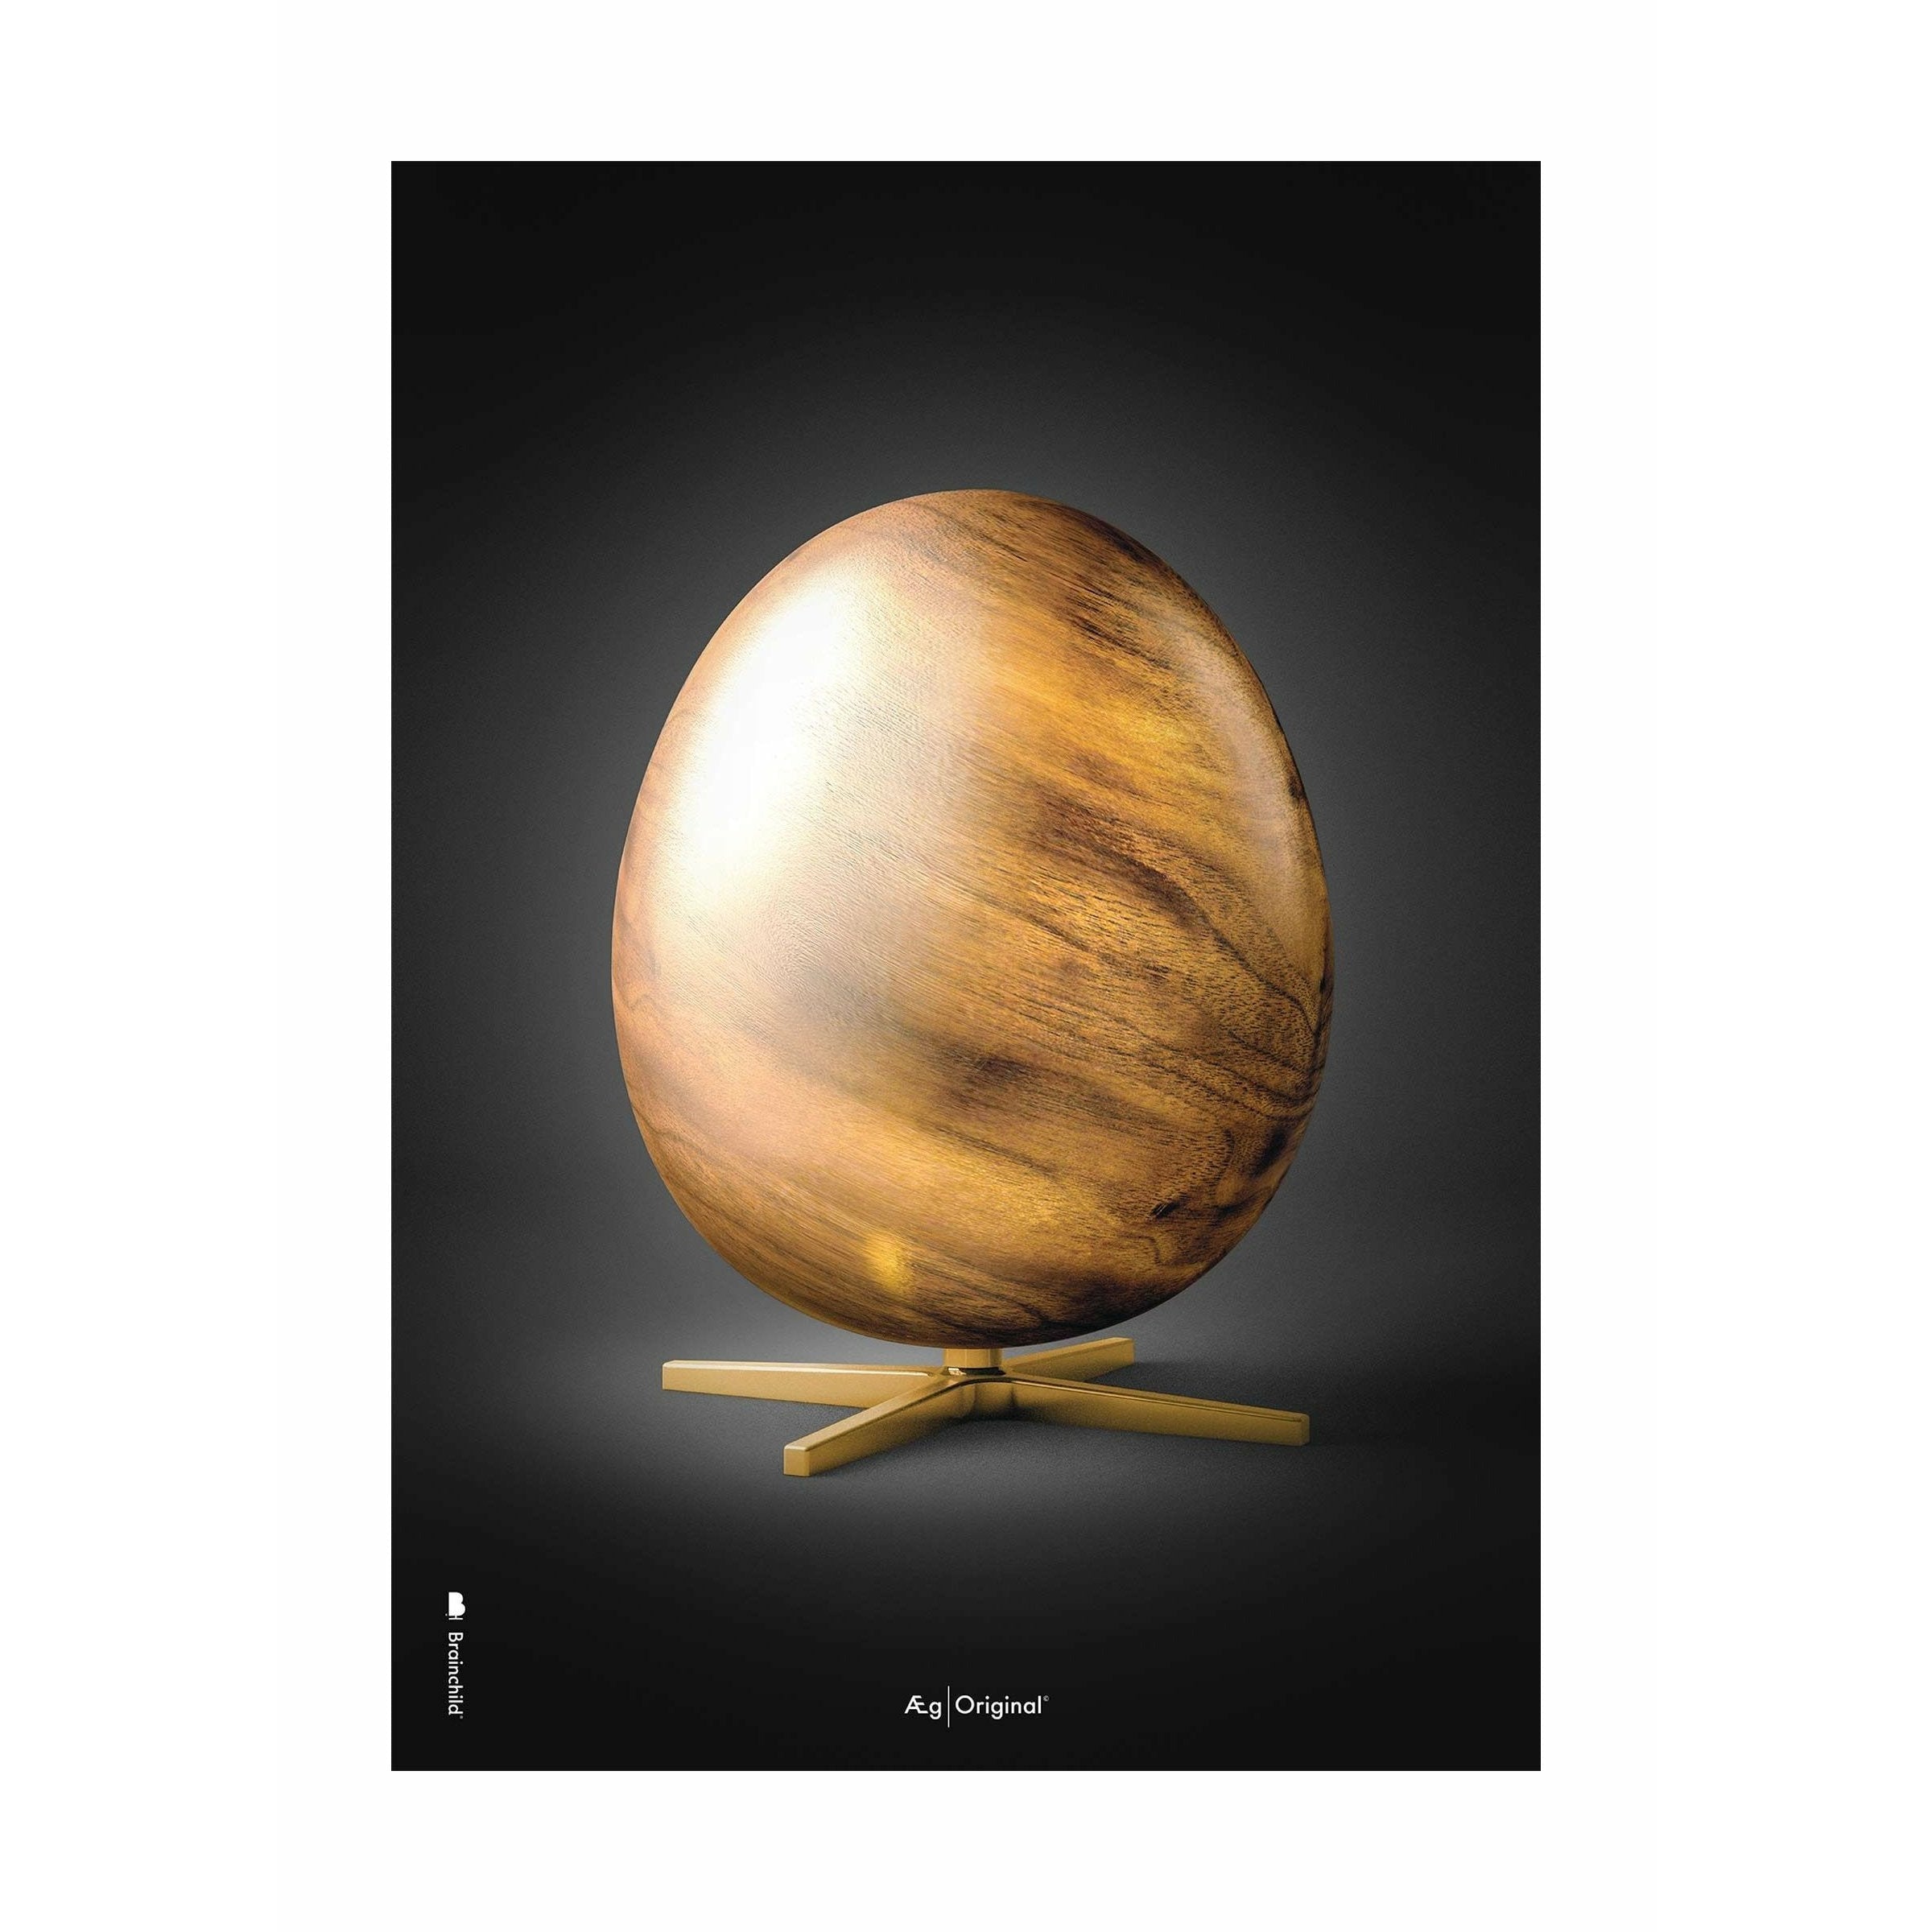 Brainchild Egg Figures Poster Without Frame 70 X100 Cm, Black